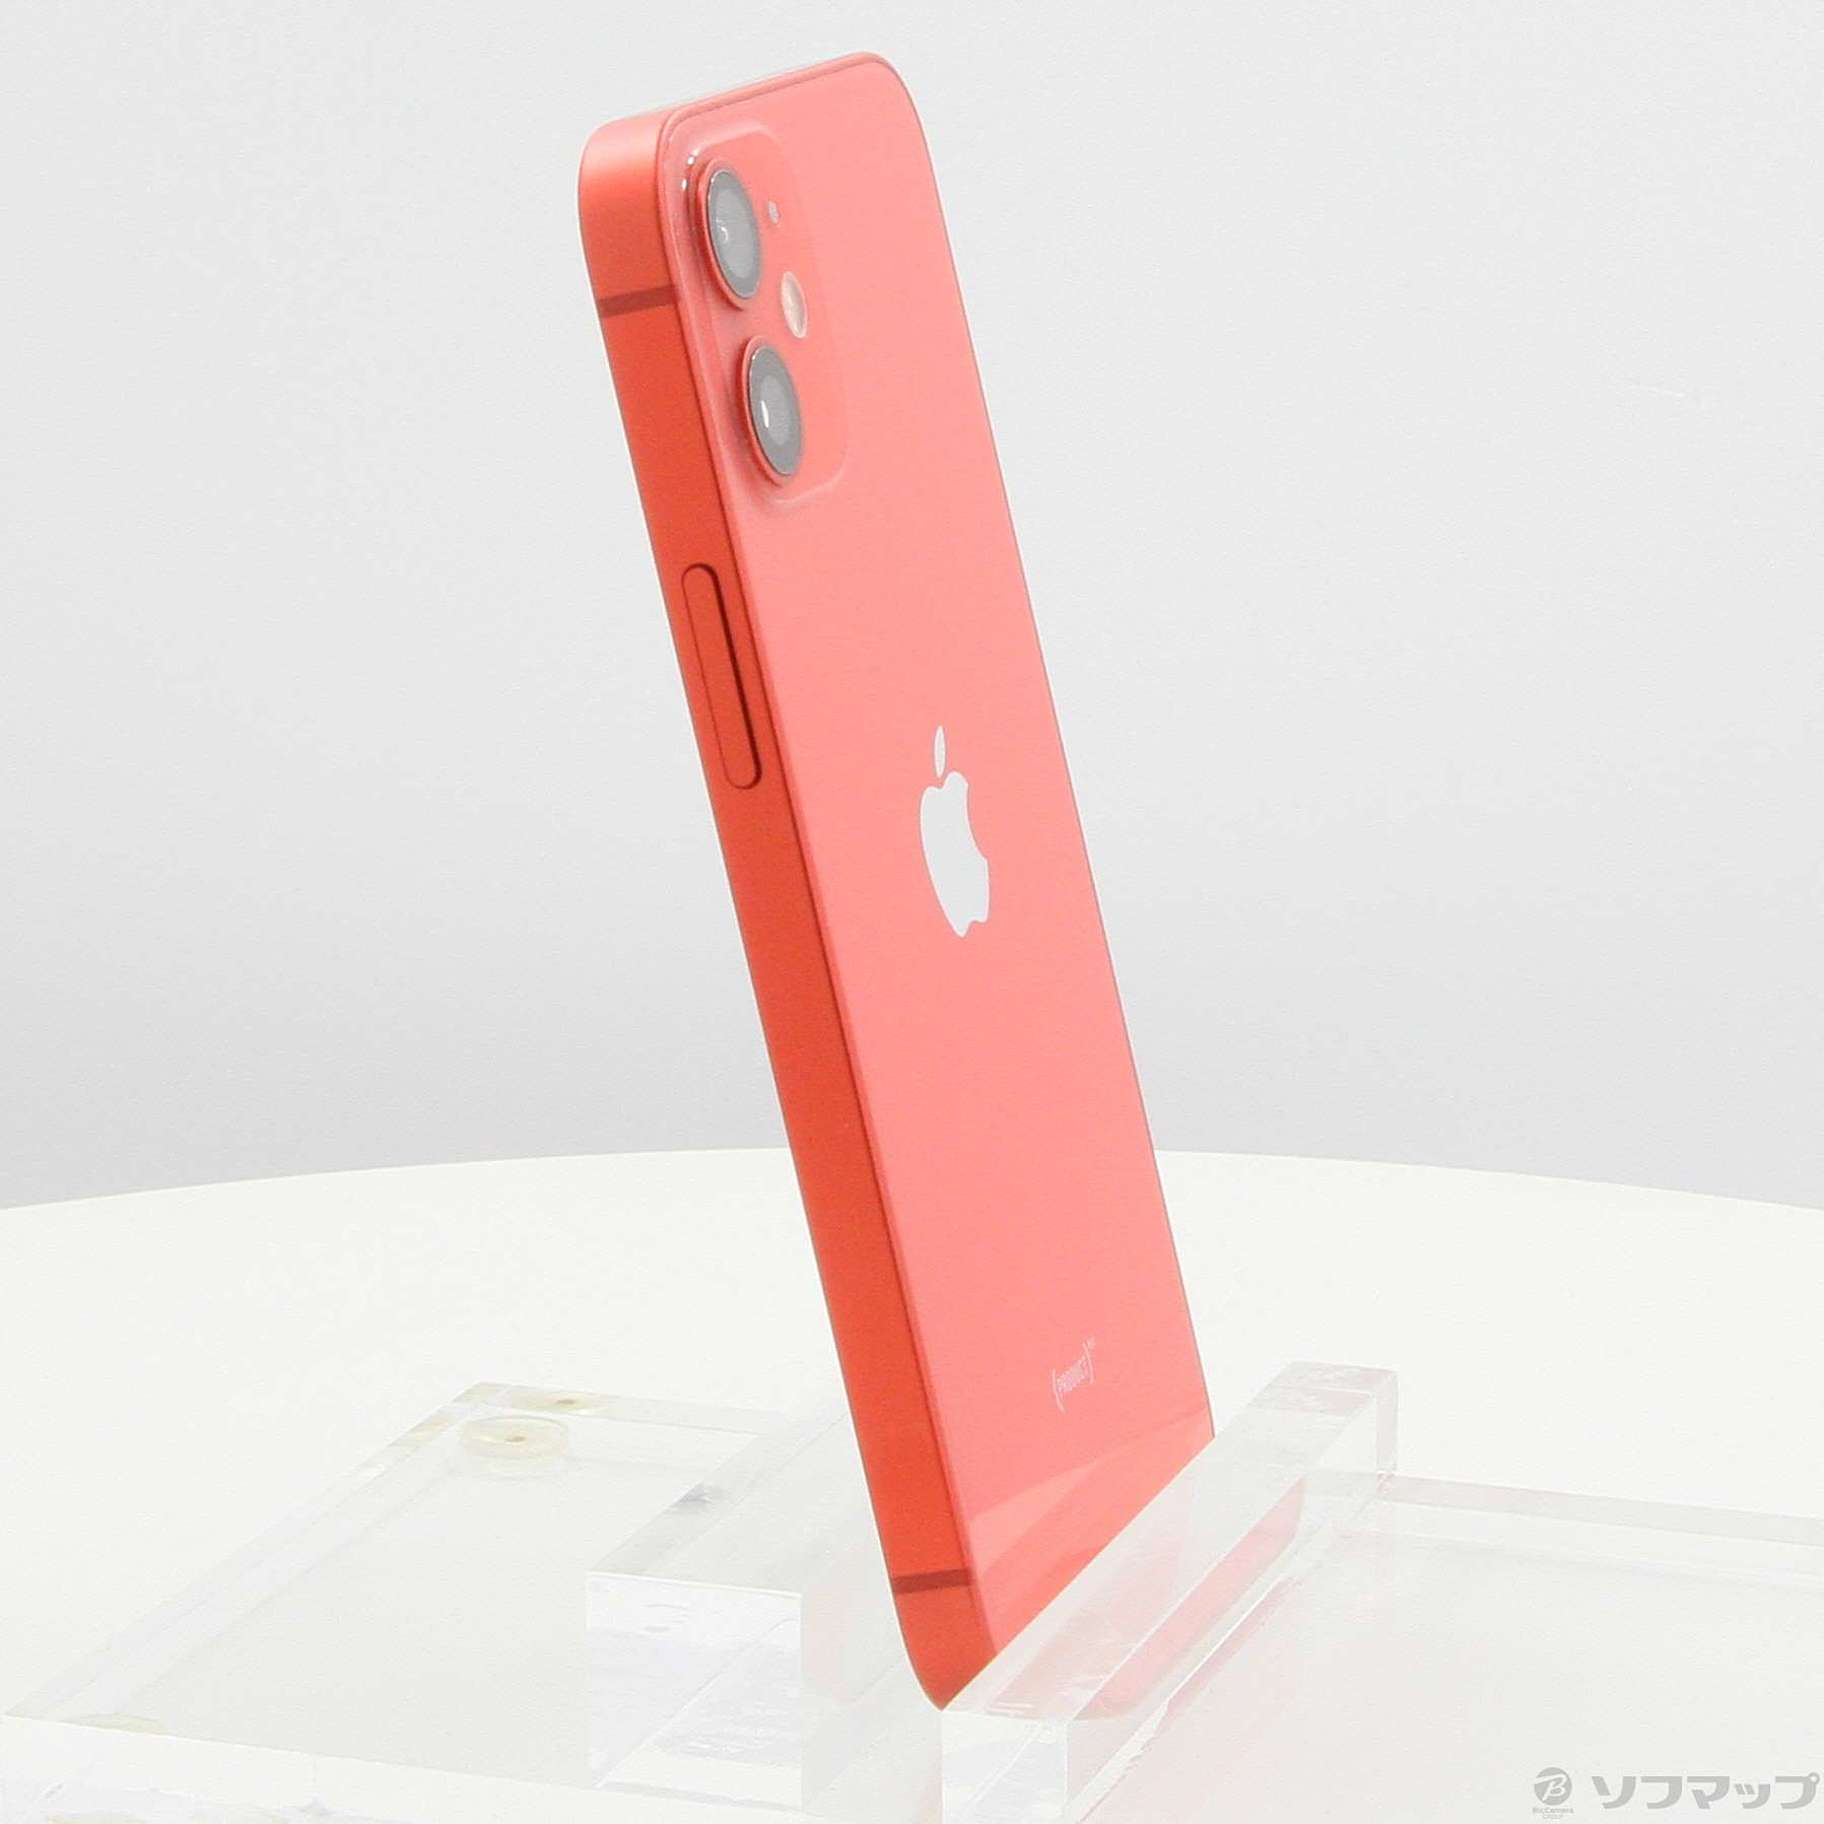 SIMフリー iPhone 12 mini 128GB レッド - スマートフォン本体